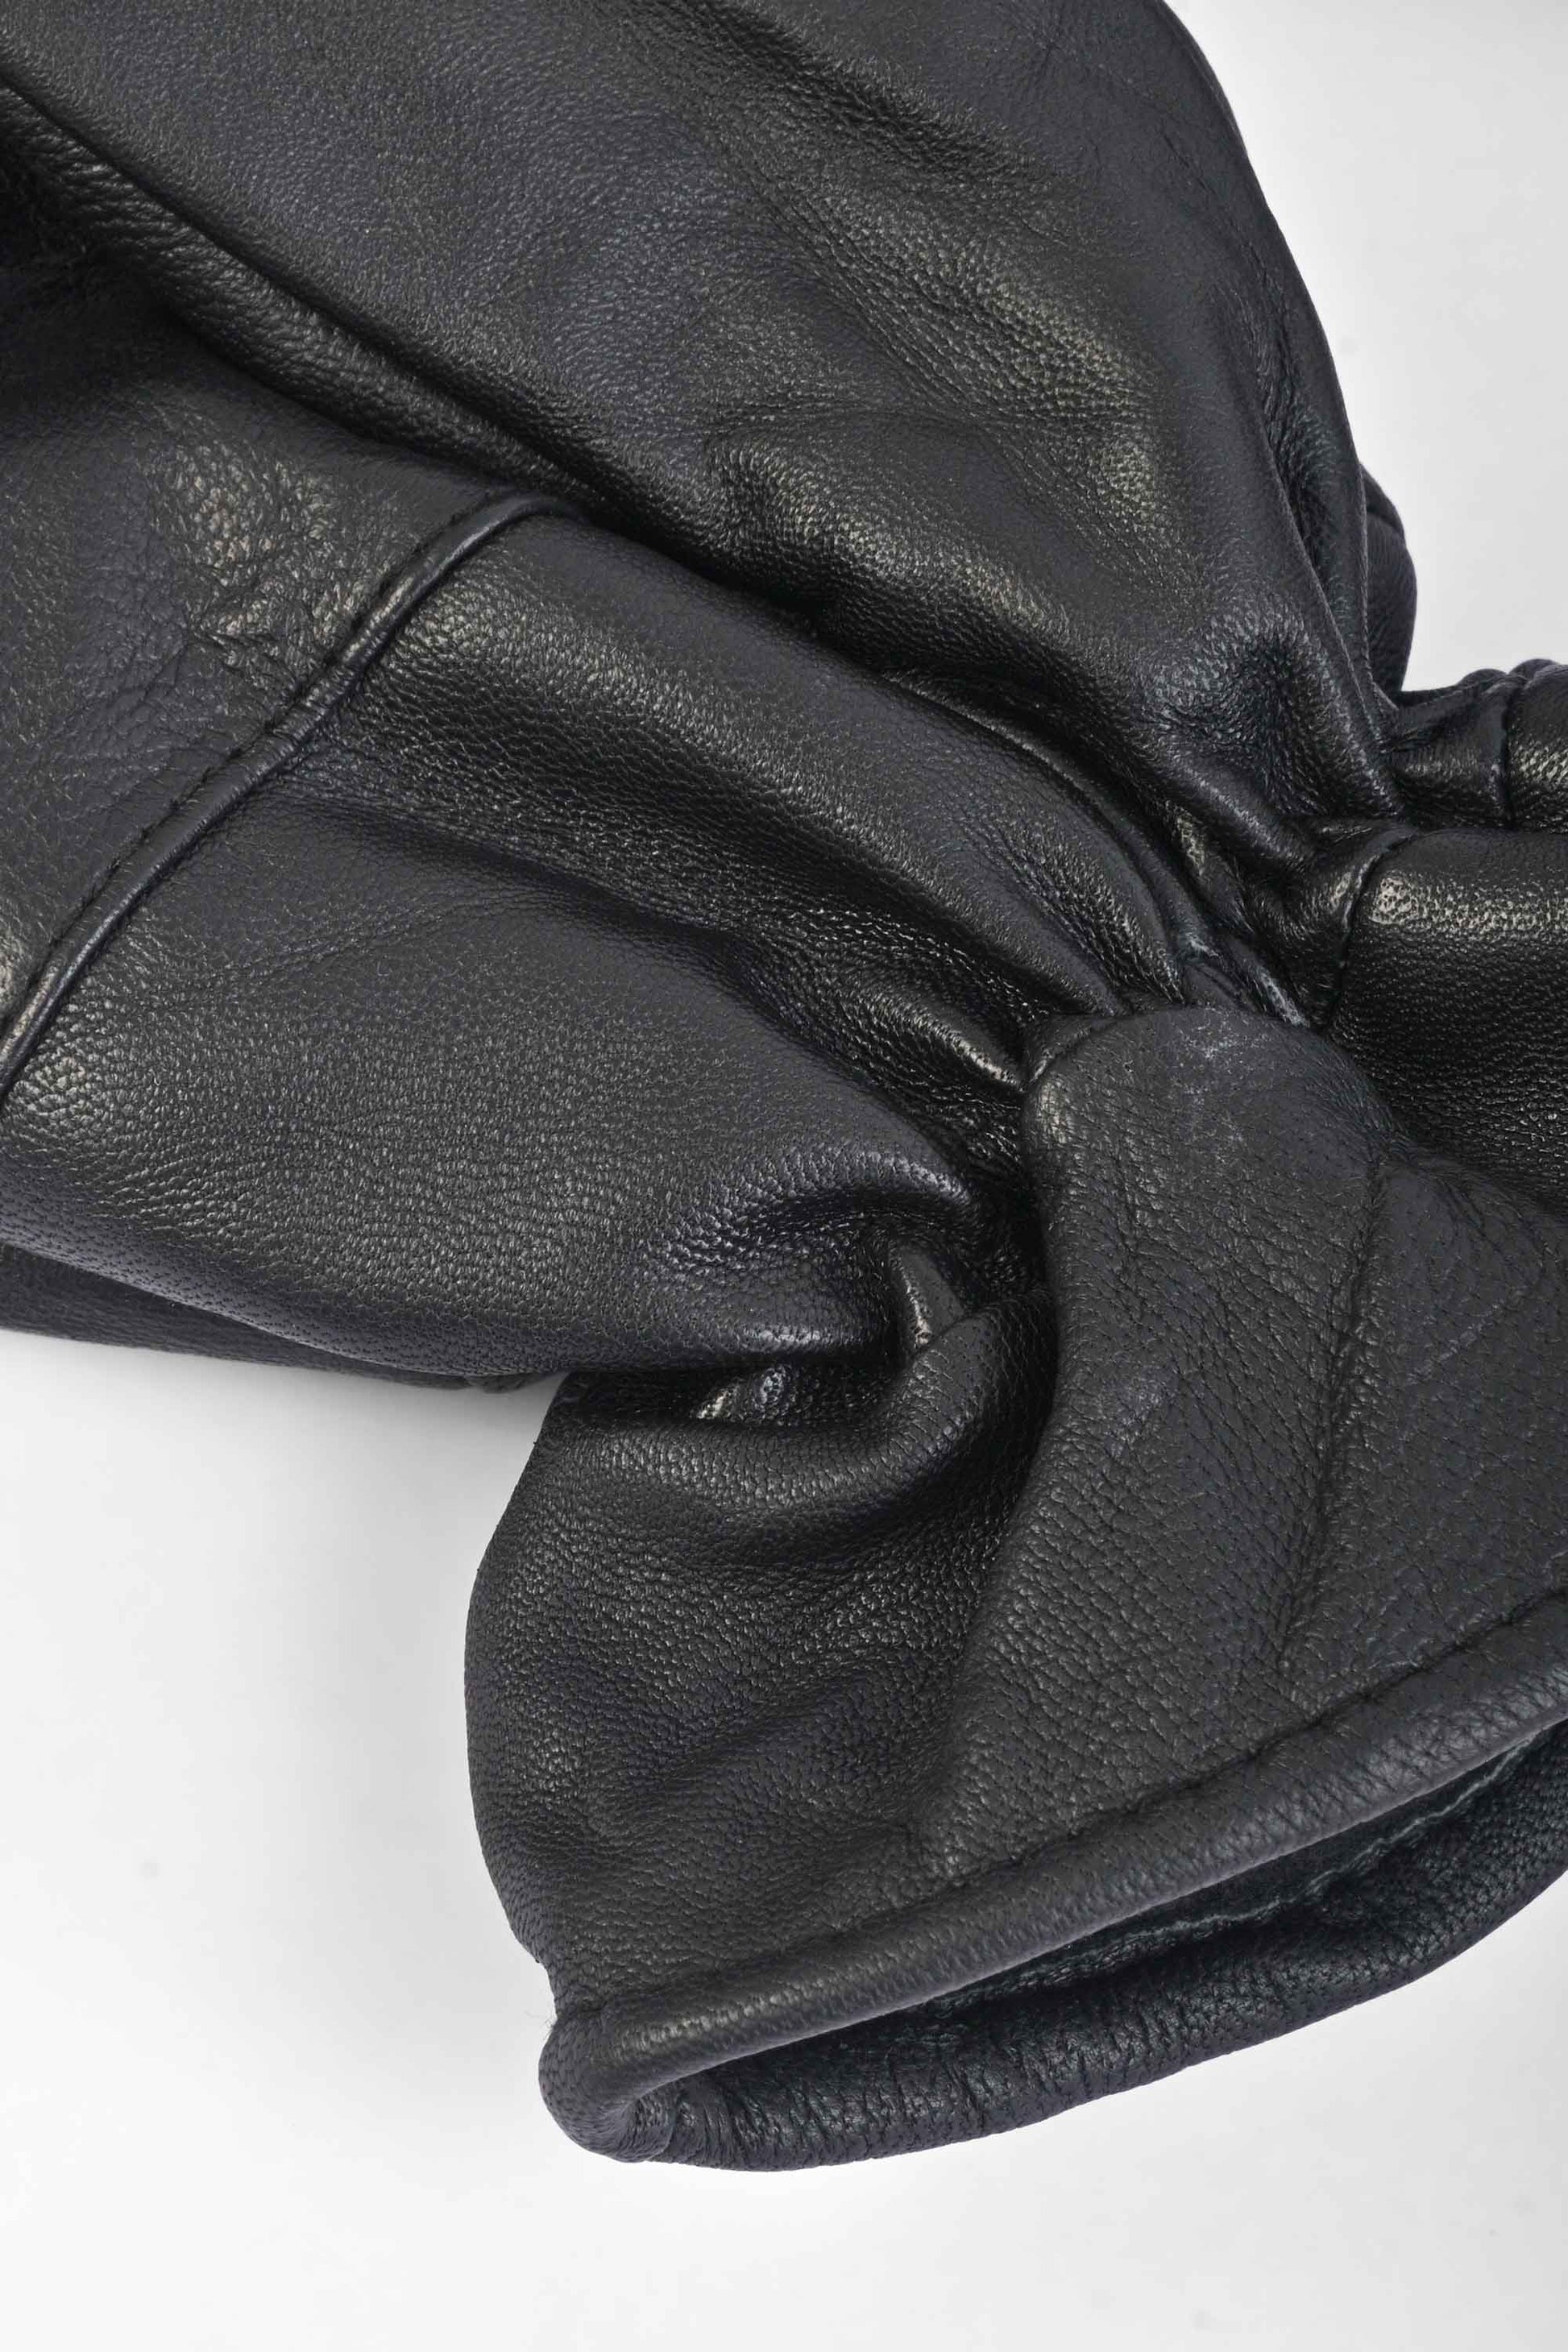 Unbroken Men's Synthetic Leather Gloves Gloves NB Enterprises 